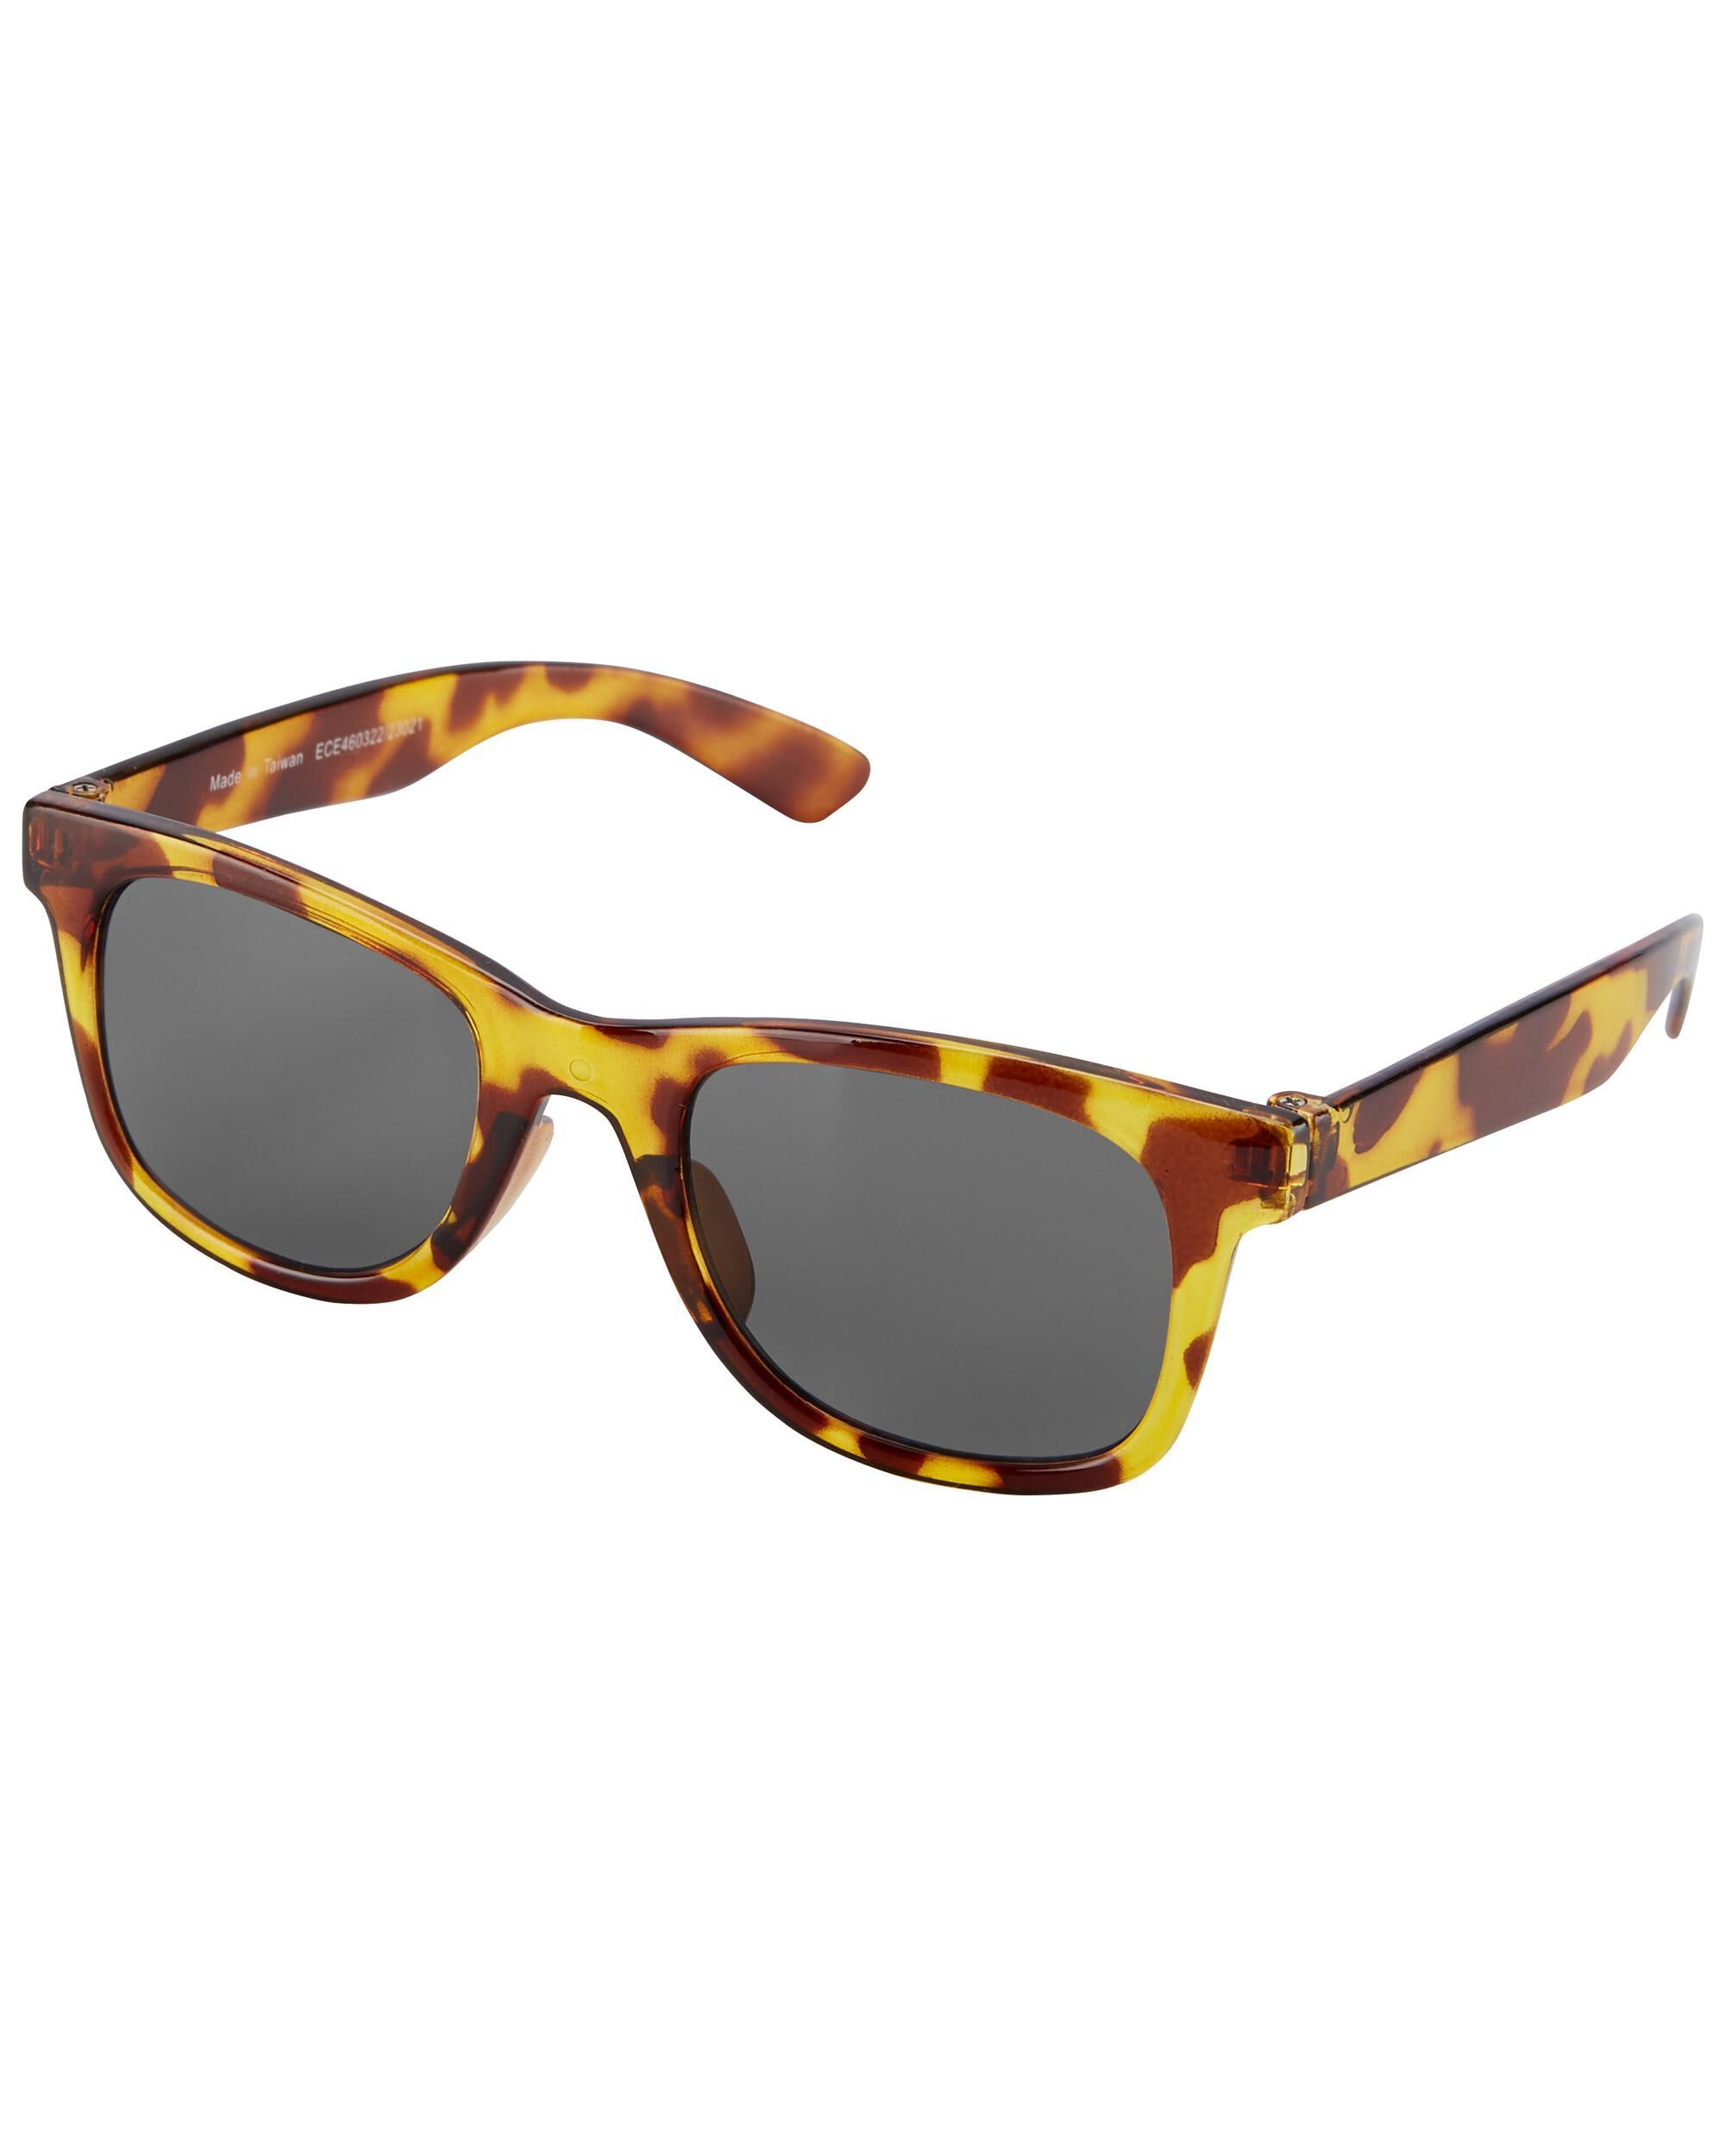 Brown Tortoise Classic Sunglasses | carters.com | Carter's